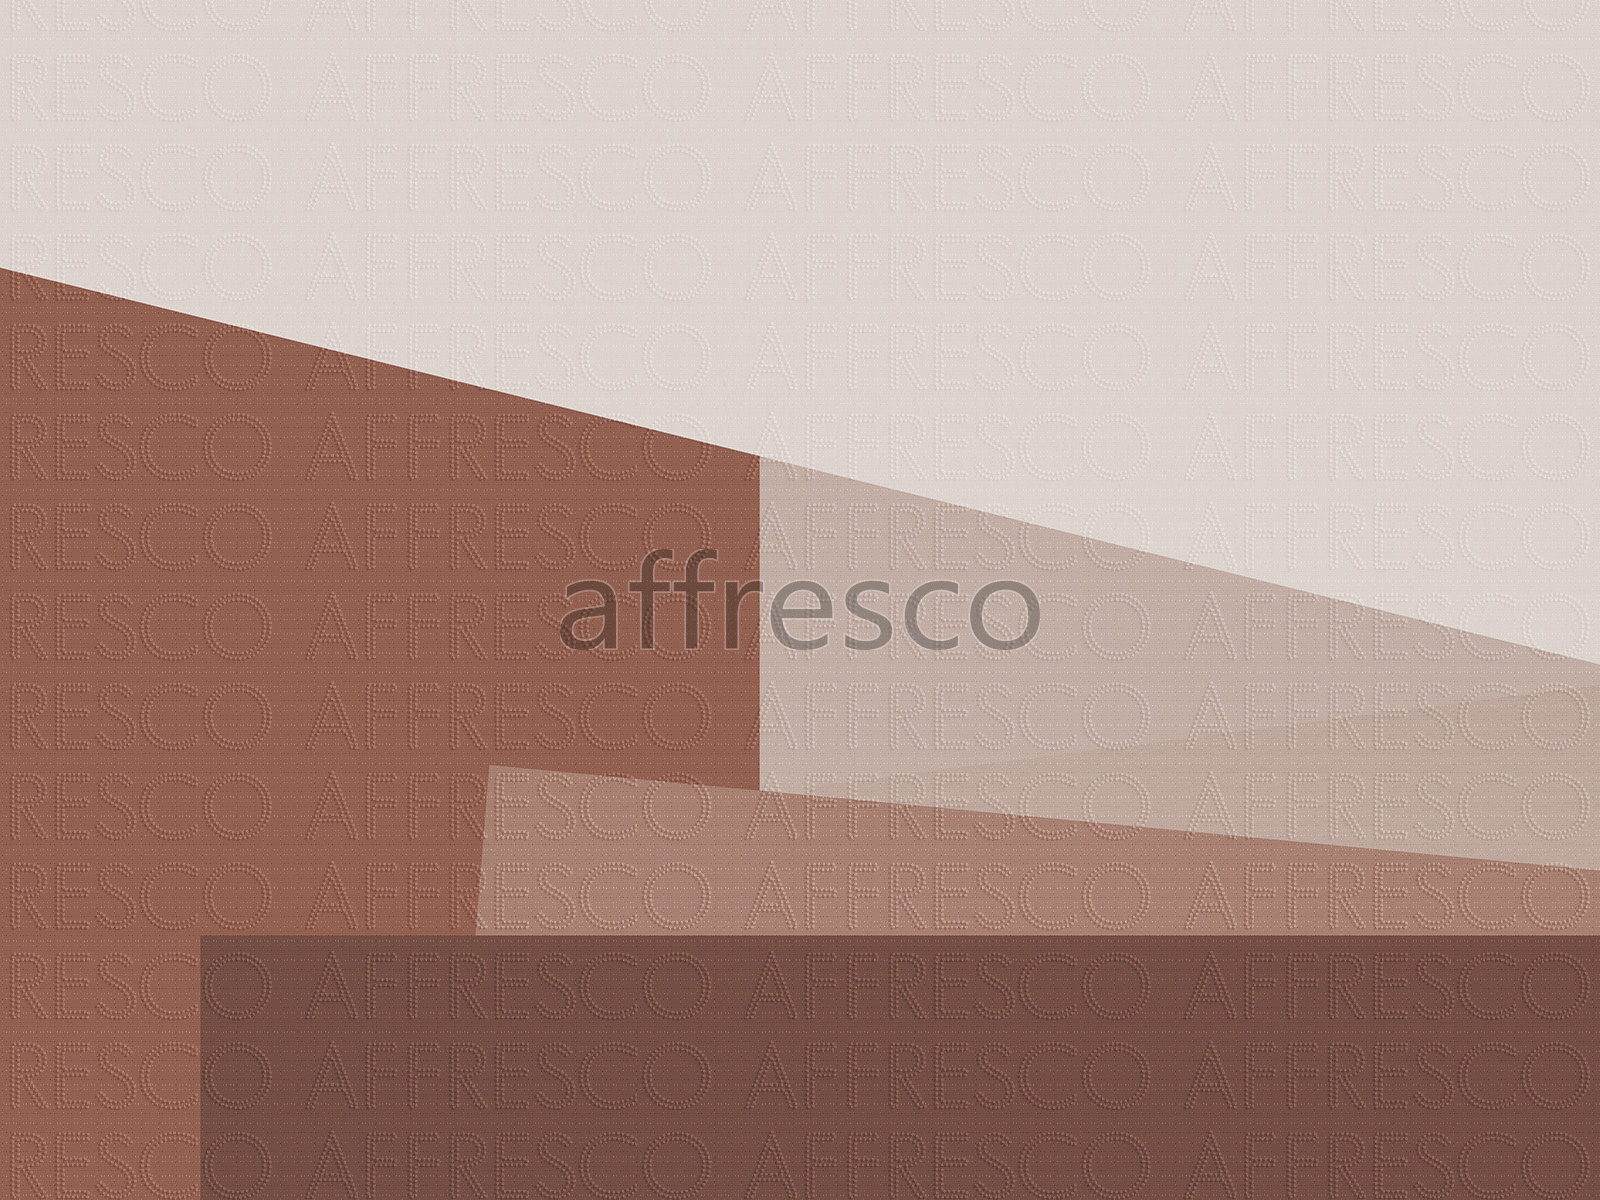 RE837-COL2 | Fine Art | Affresco Factory